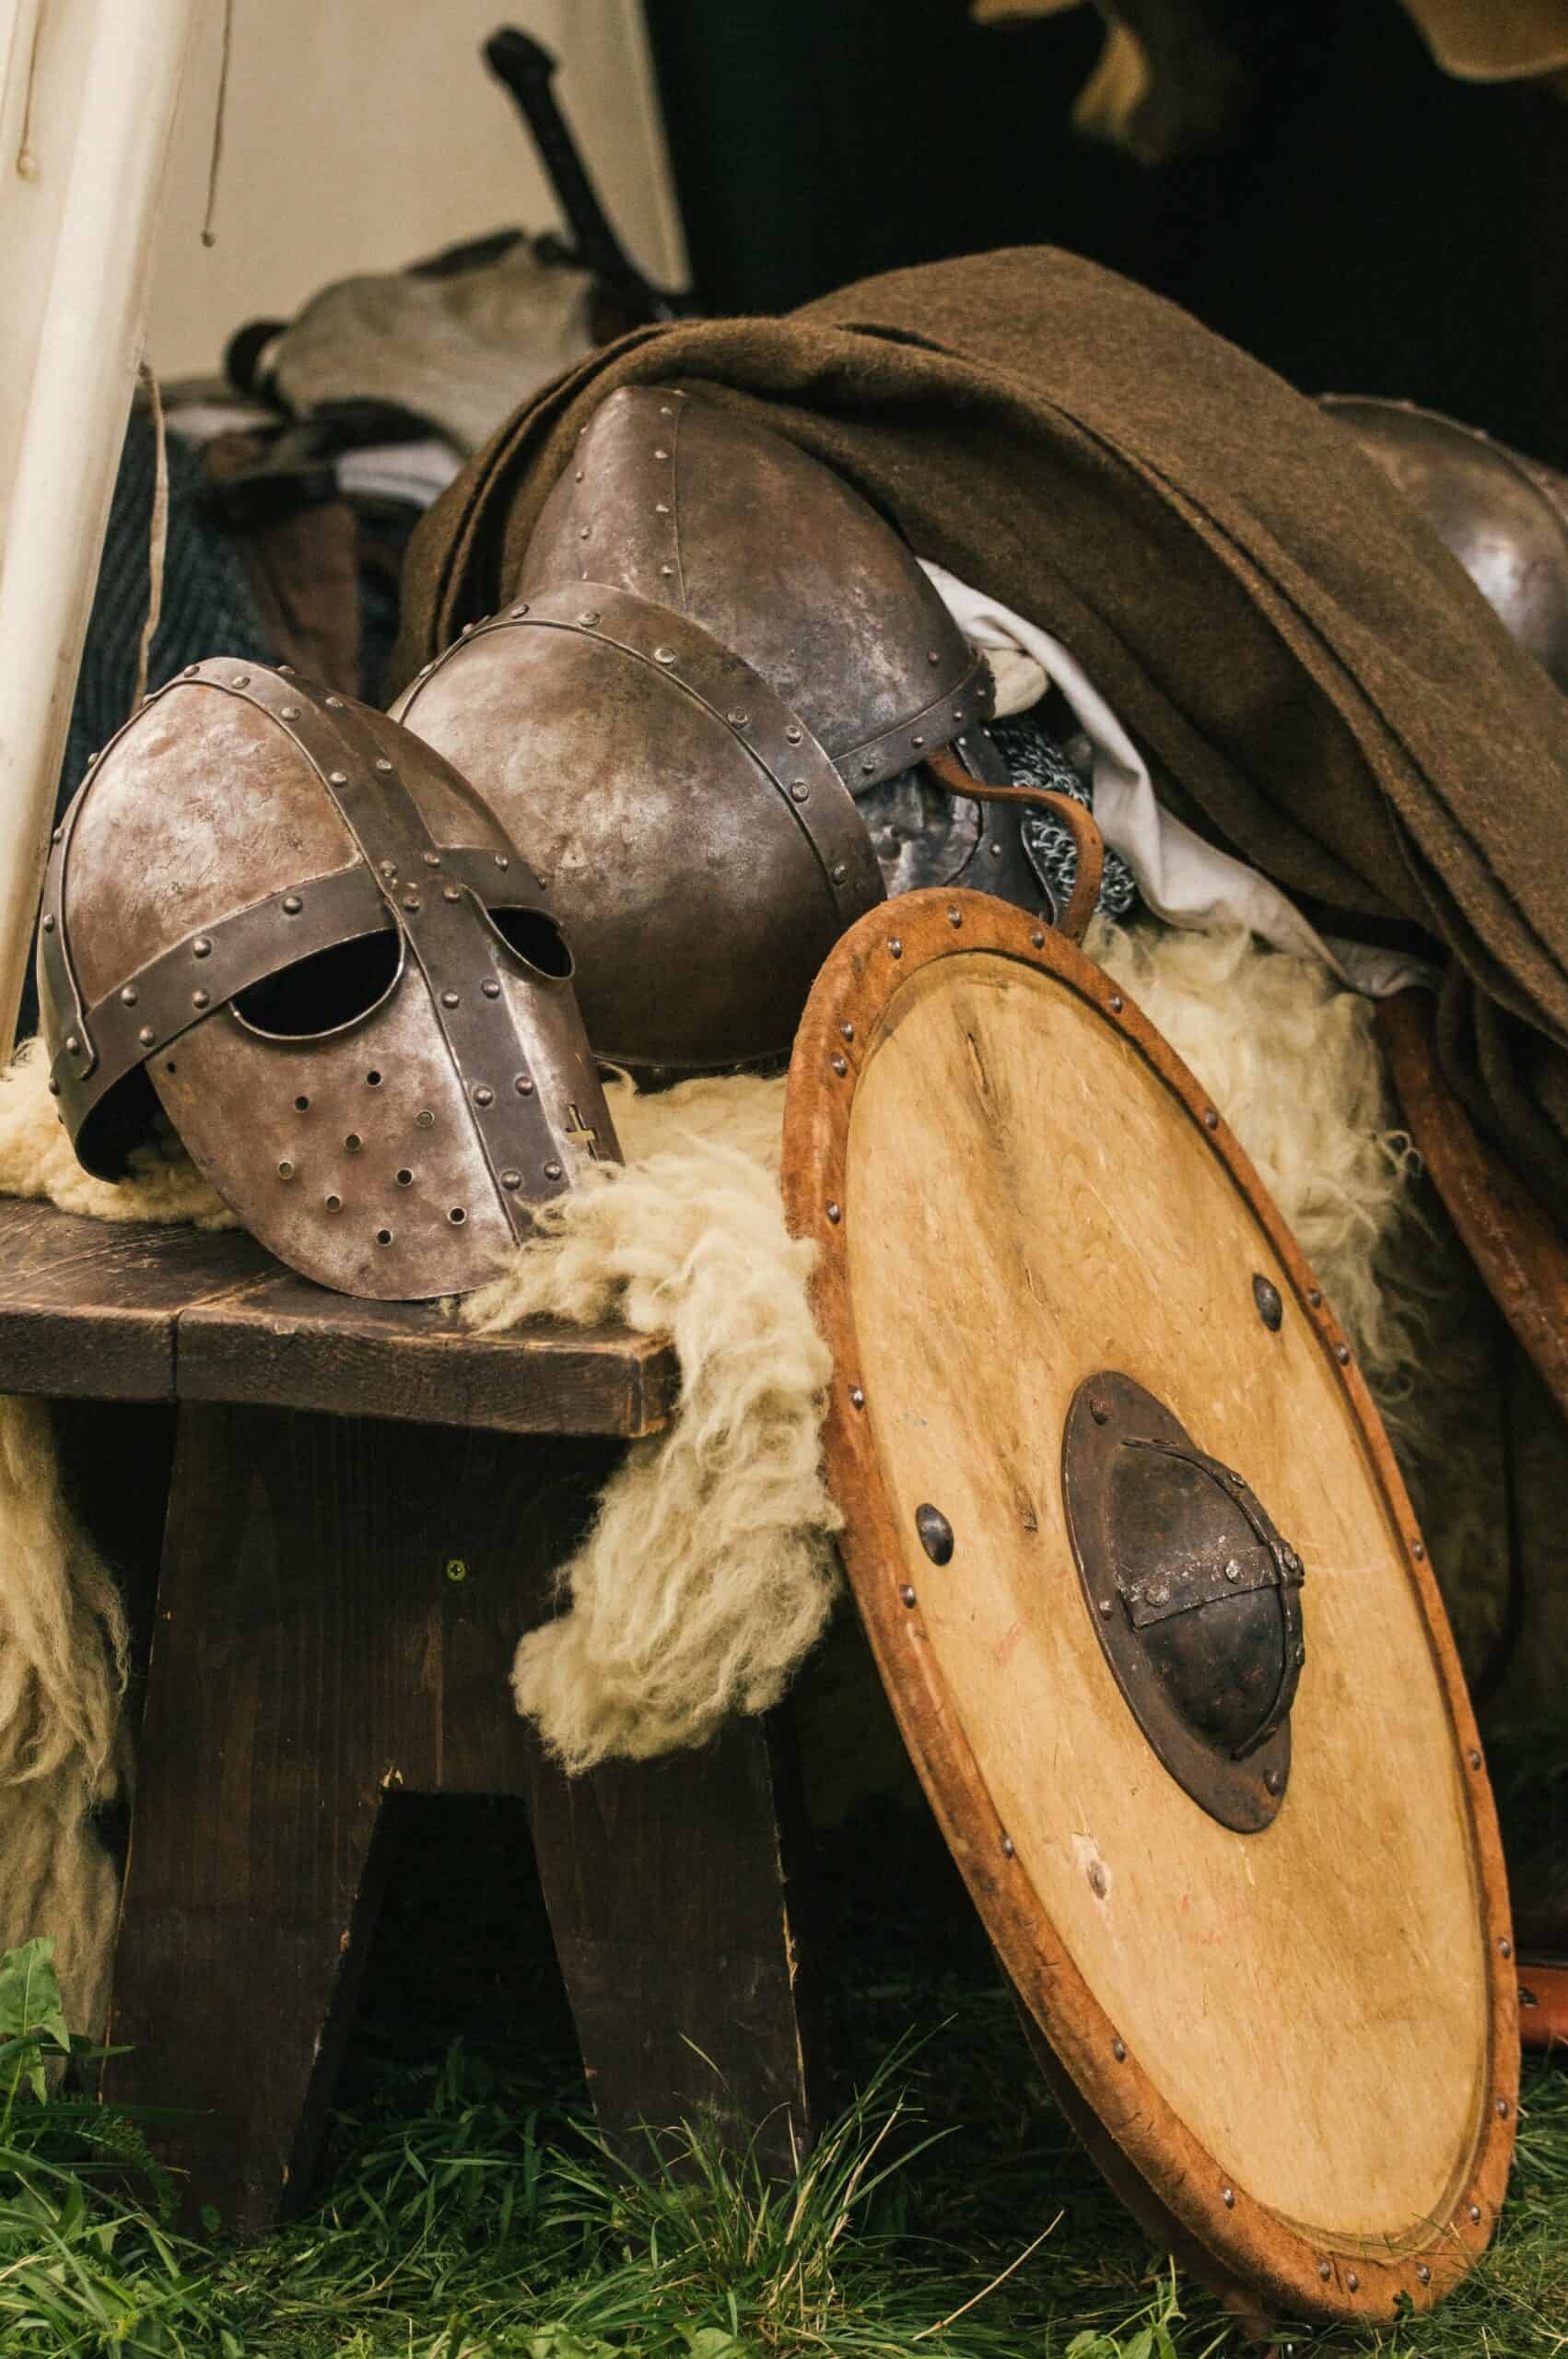 armor: helmet, sword, shield, breastplate